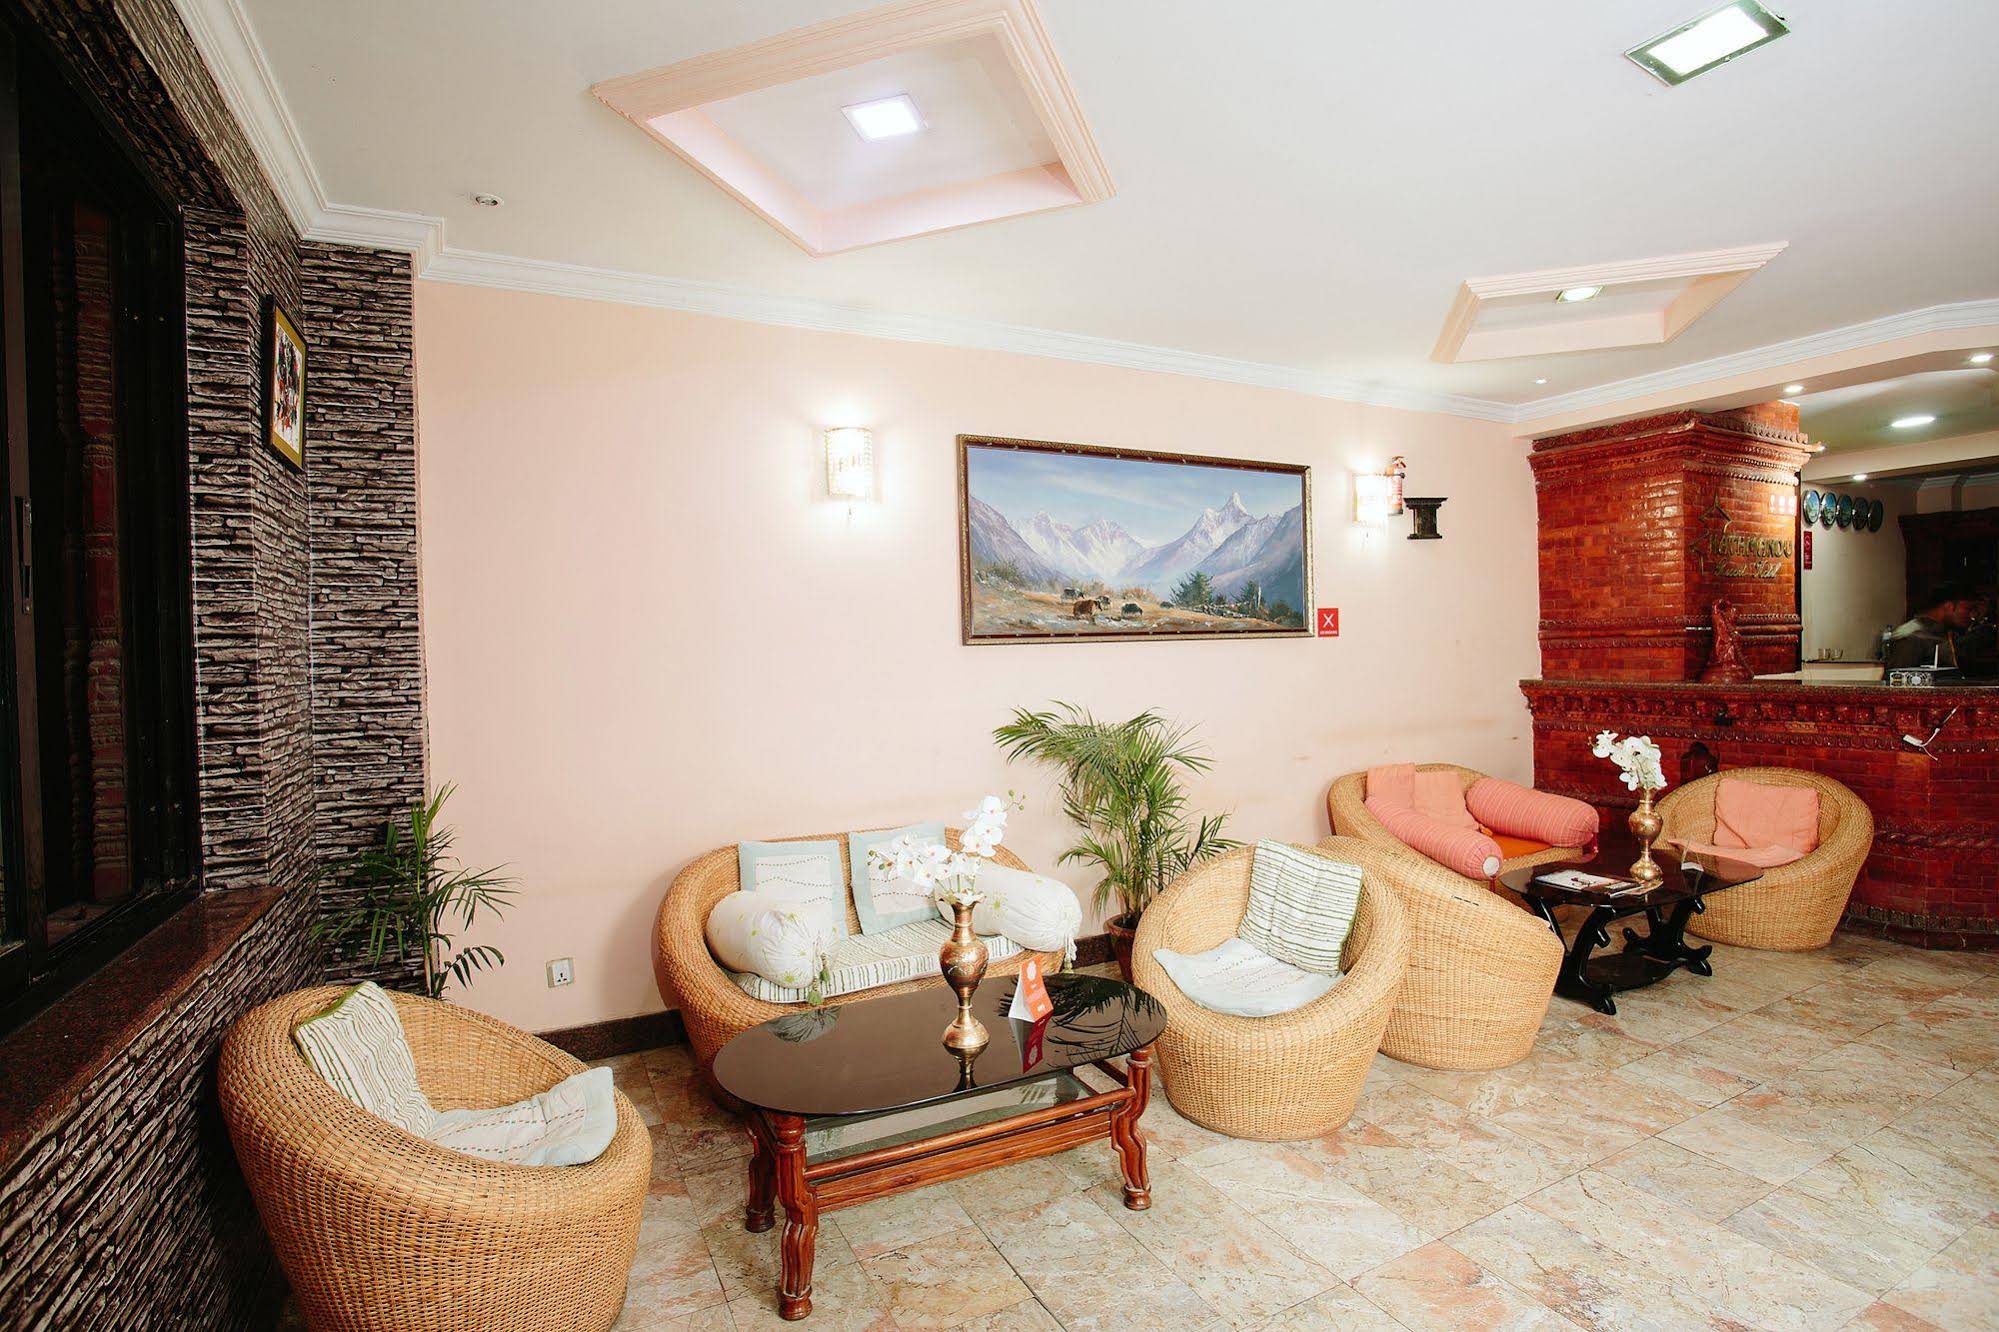 Kathmandu Resort Hotel